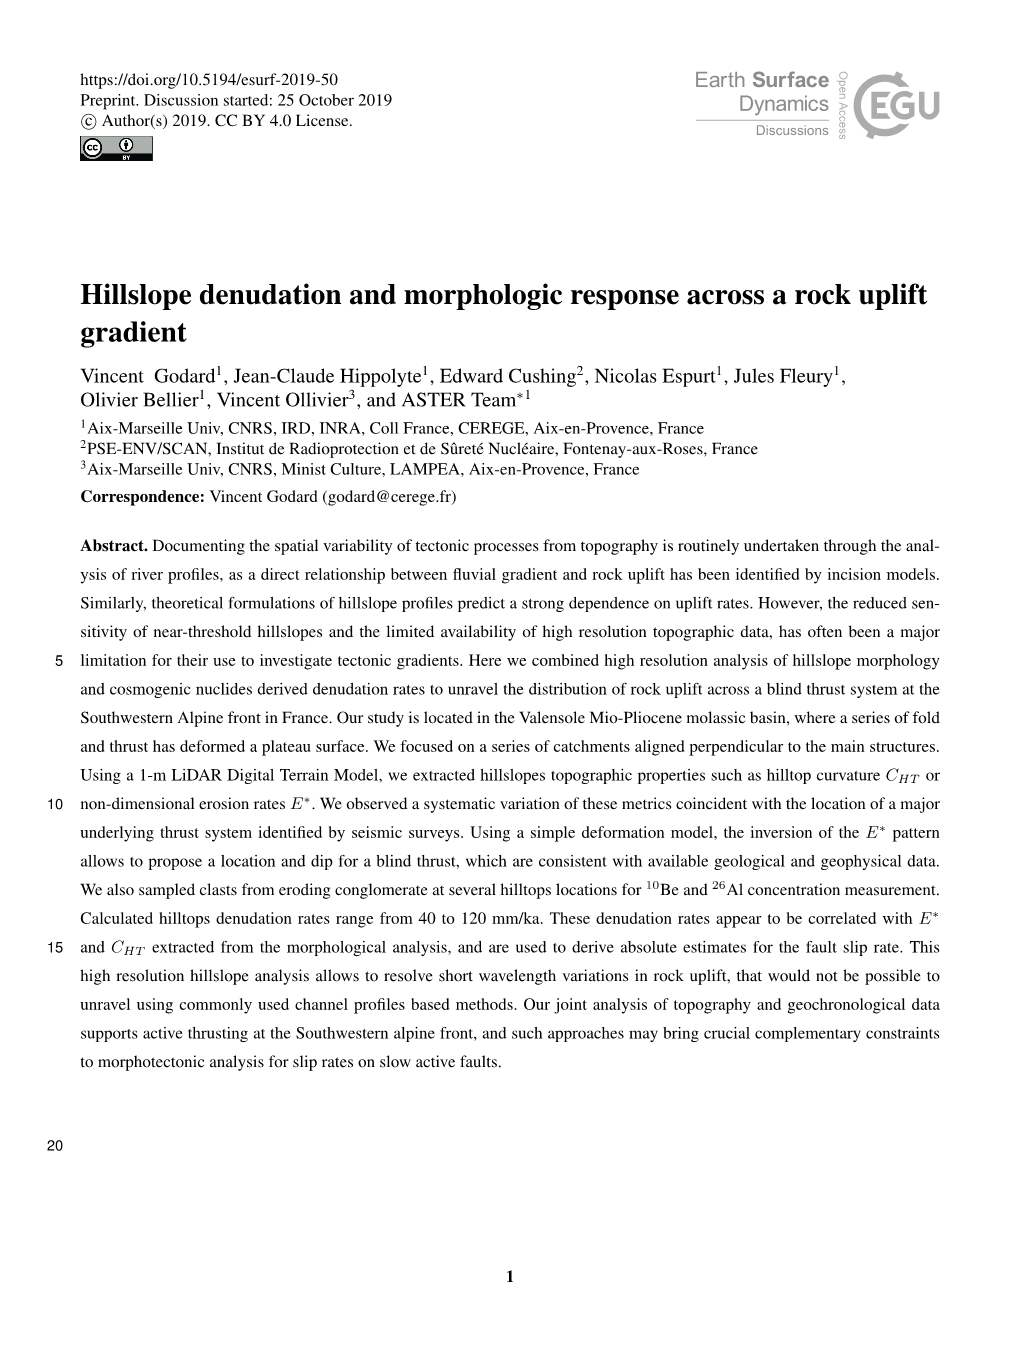 Hillslope Denudation and Morphologic Response Across a Rock Uplift Gradient